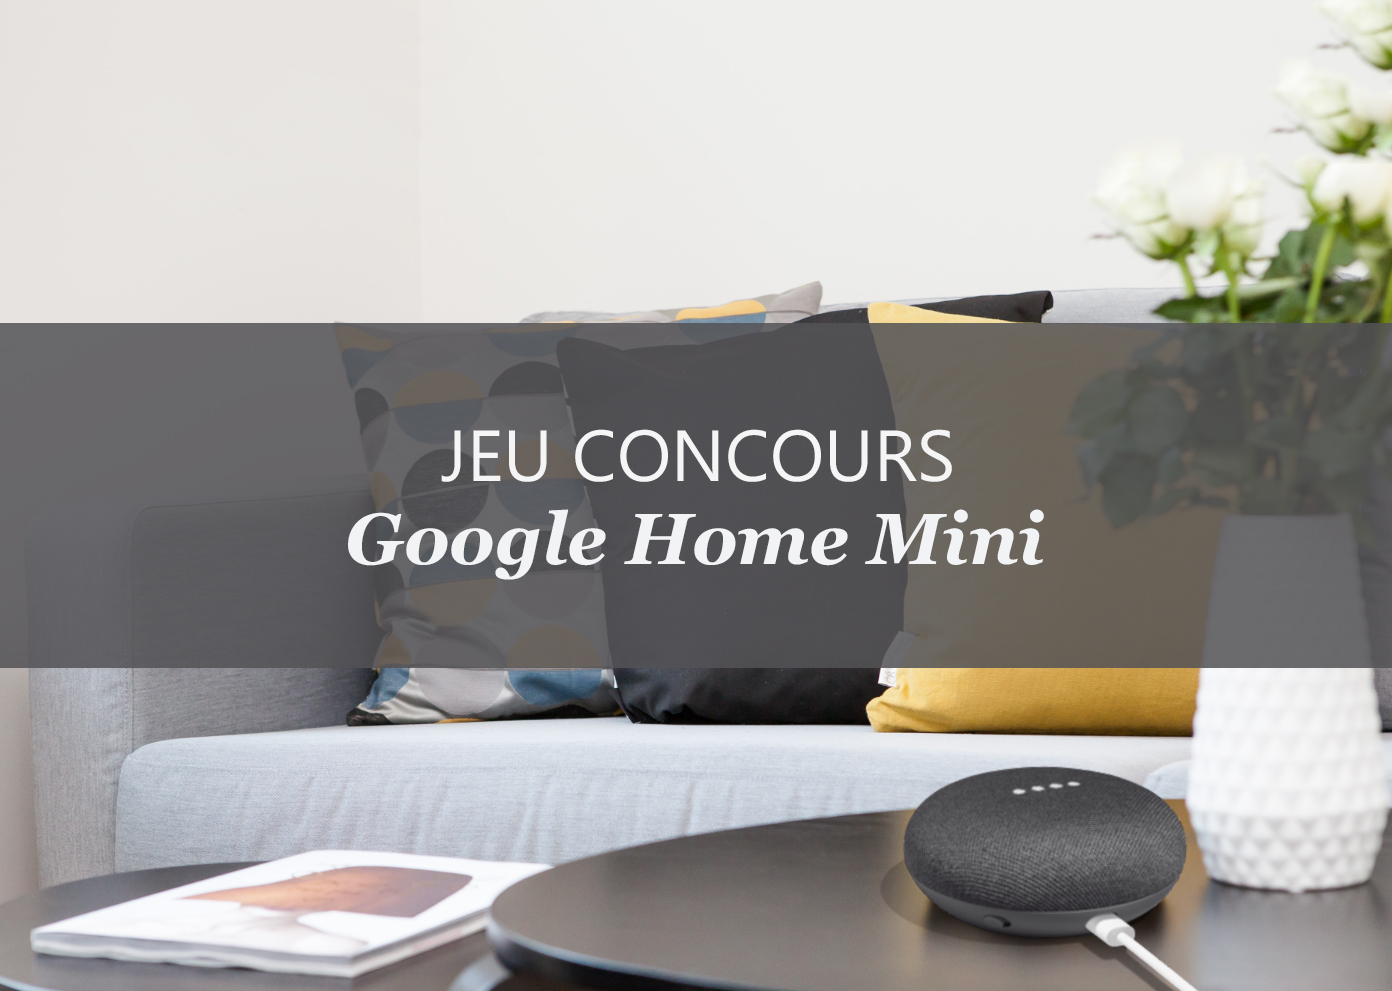 Jeu concours Google Home Mini